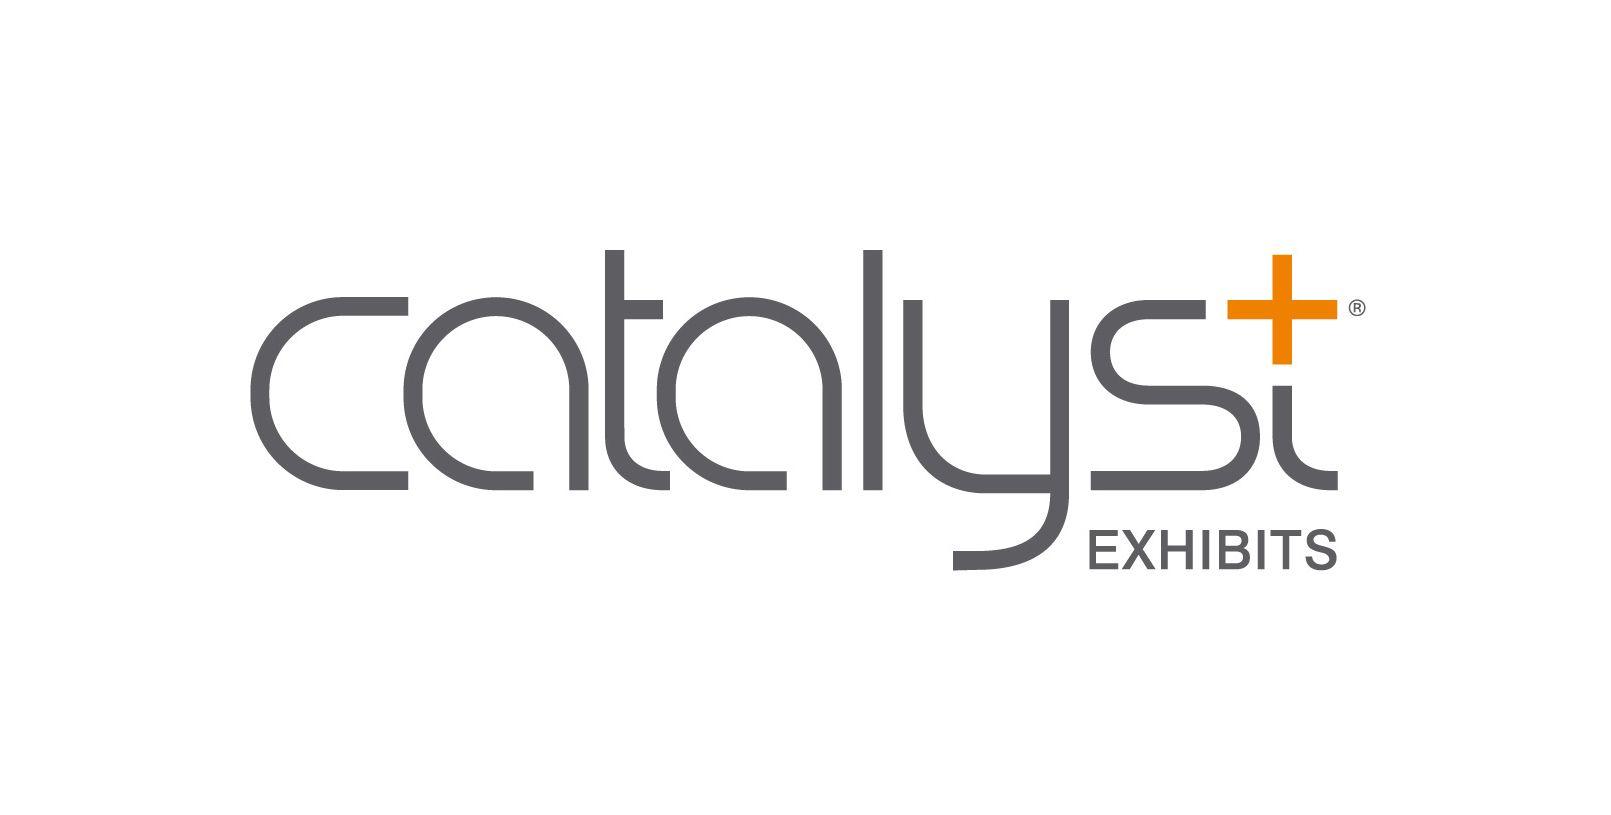 Catalyst Logo - Image result for catalyst logo | Arabian Night | Company logo, Logos ...